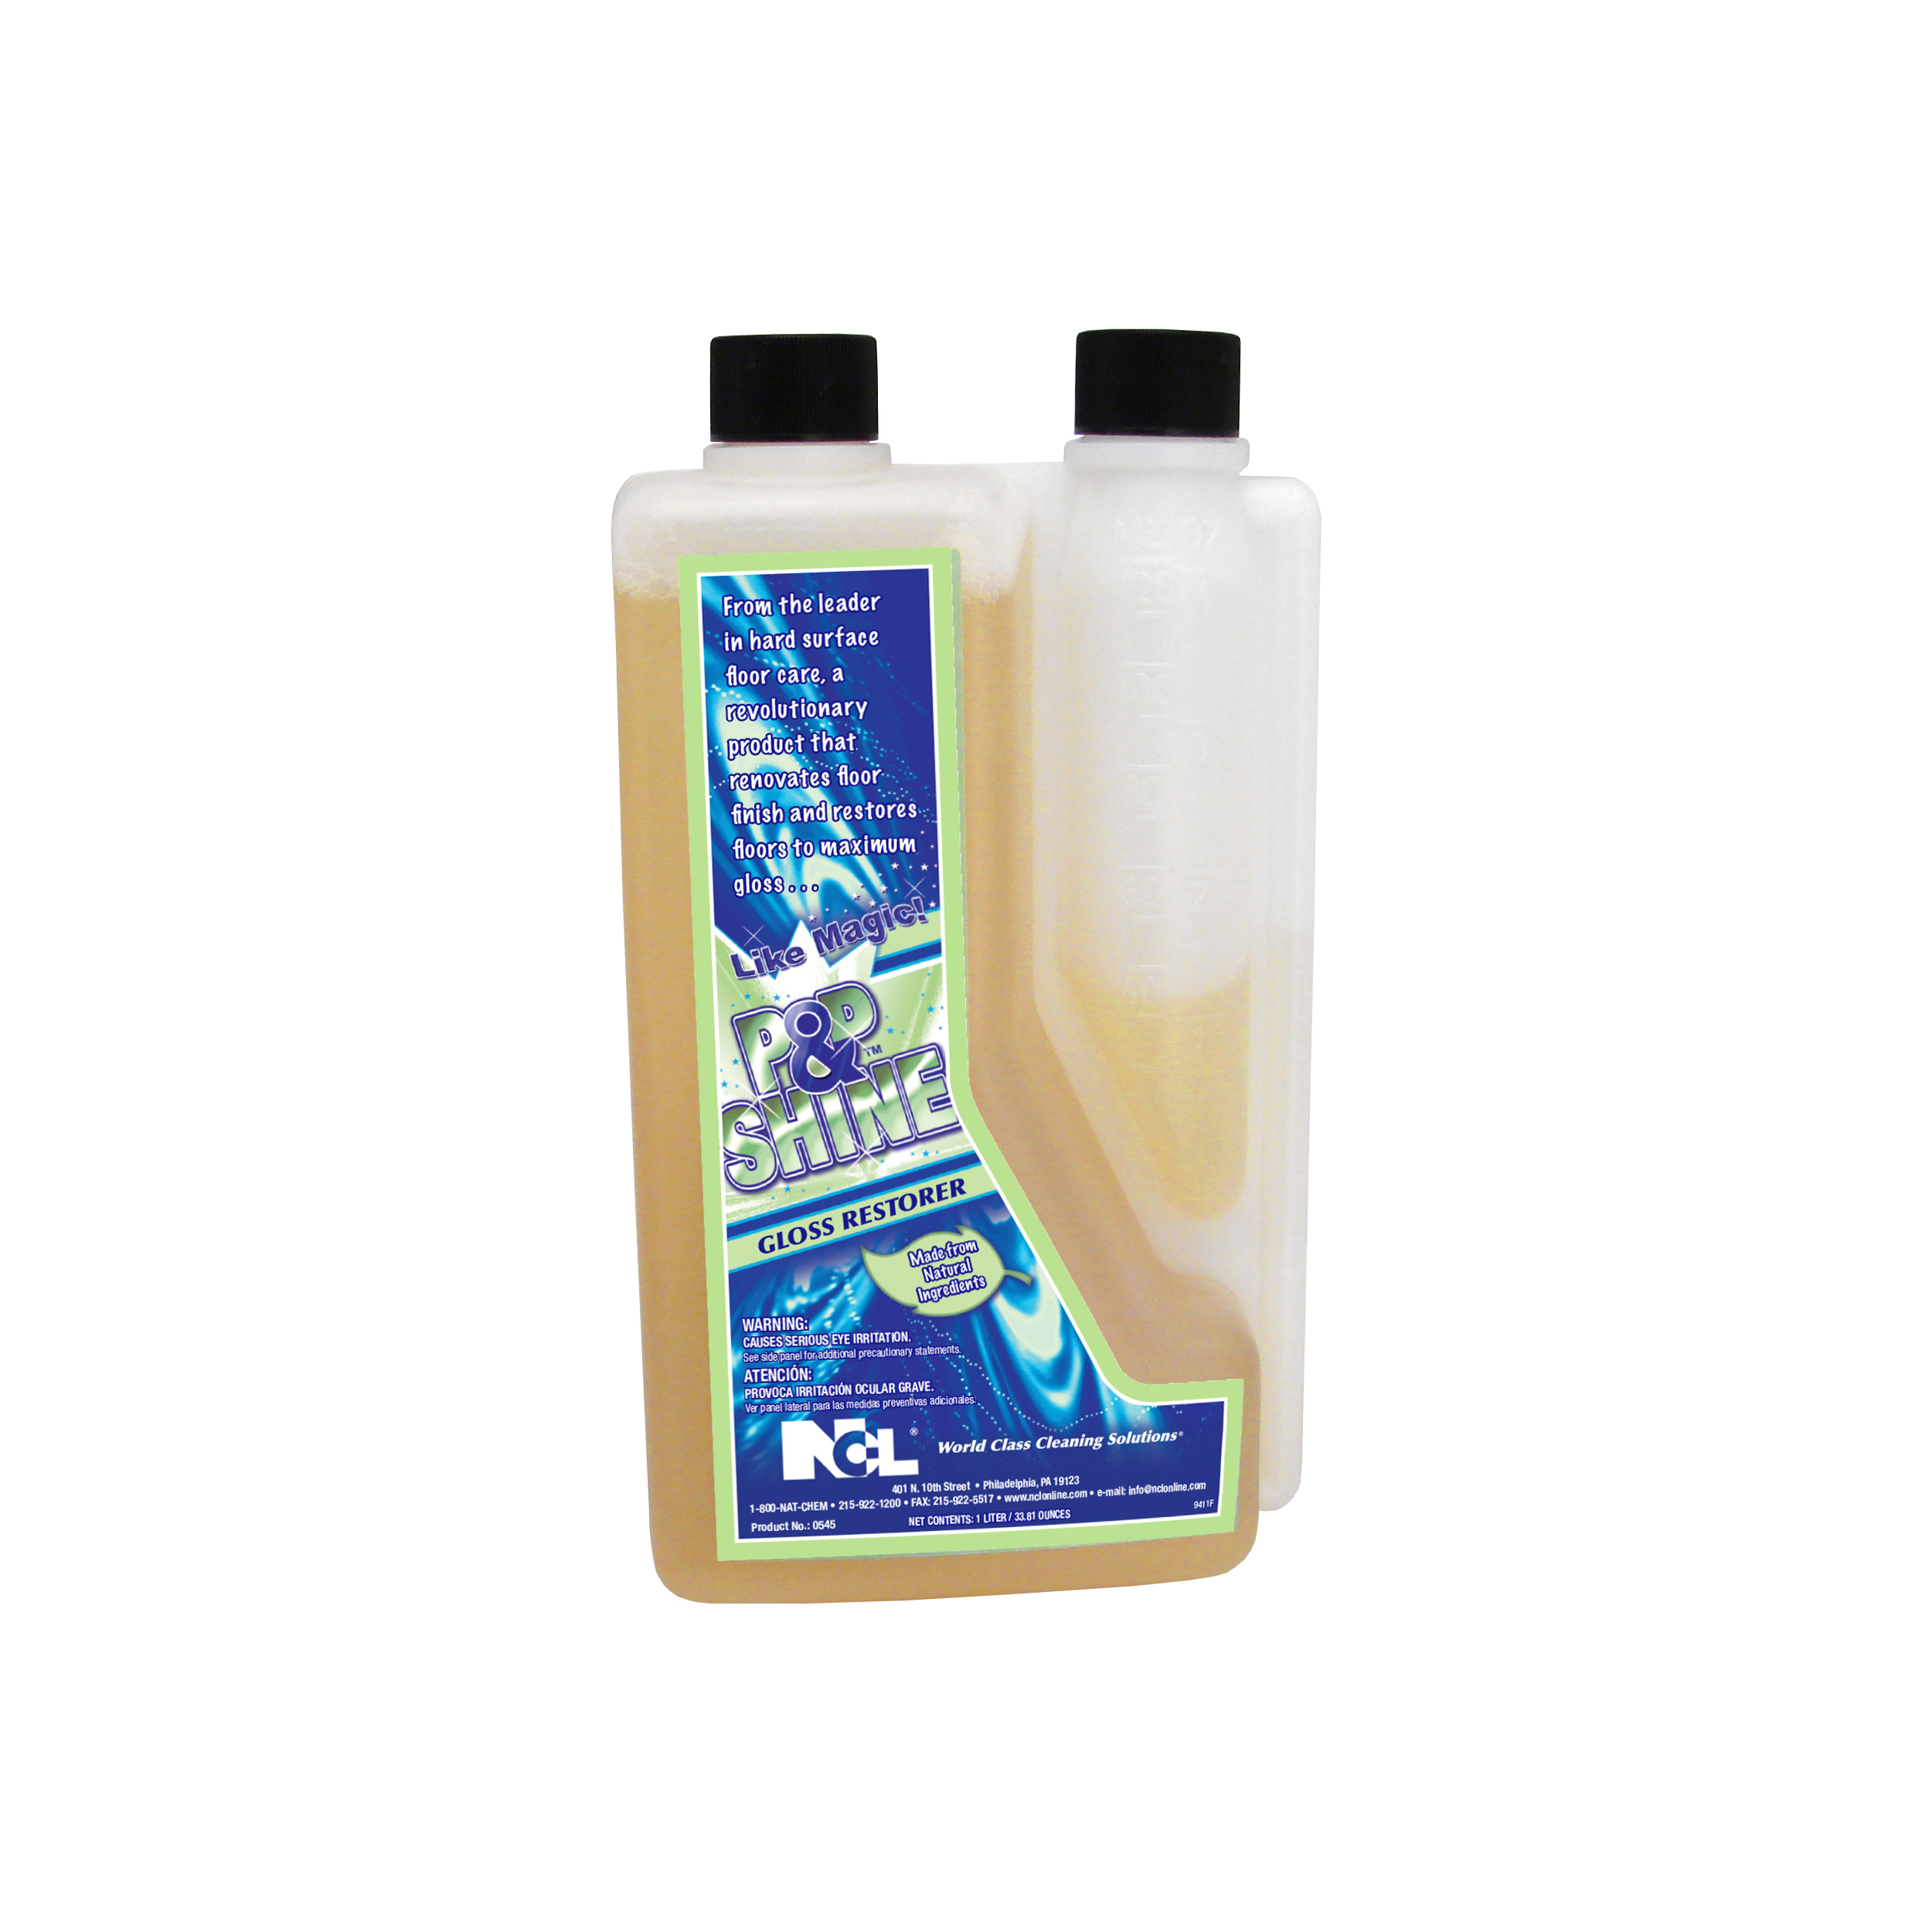  POP & SHINE Gloss Restorer 6/1 liter Case (NCL0545-69) 